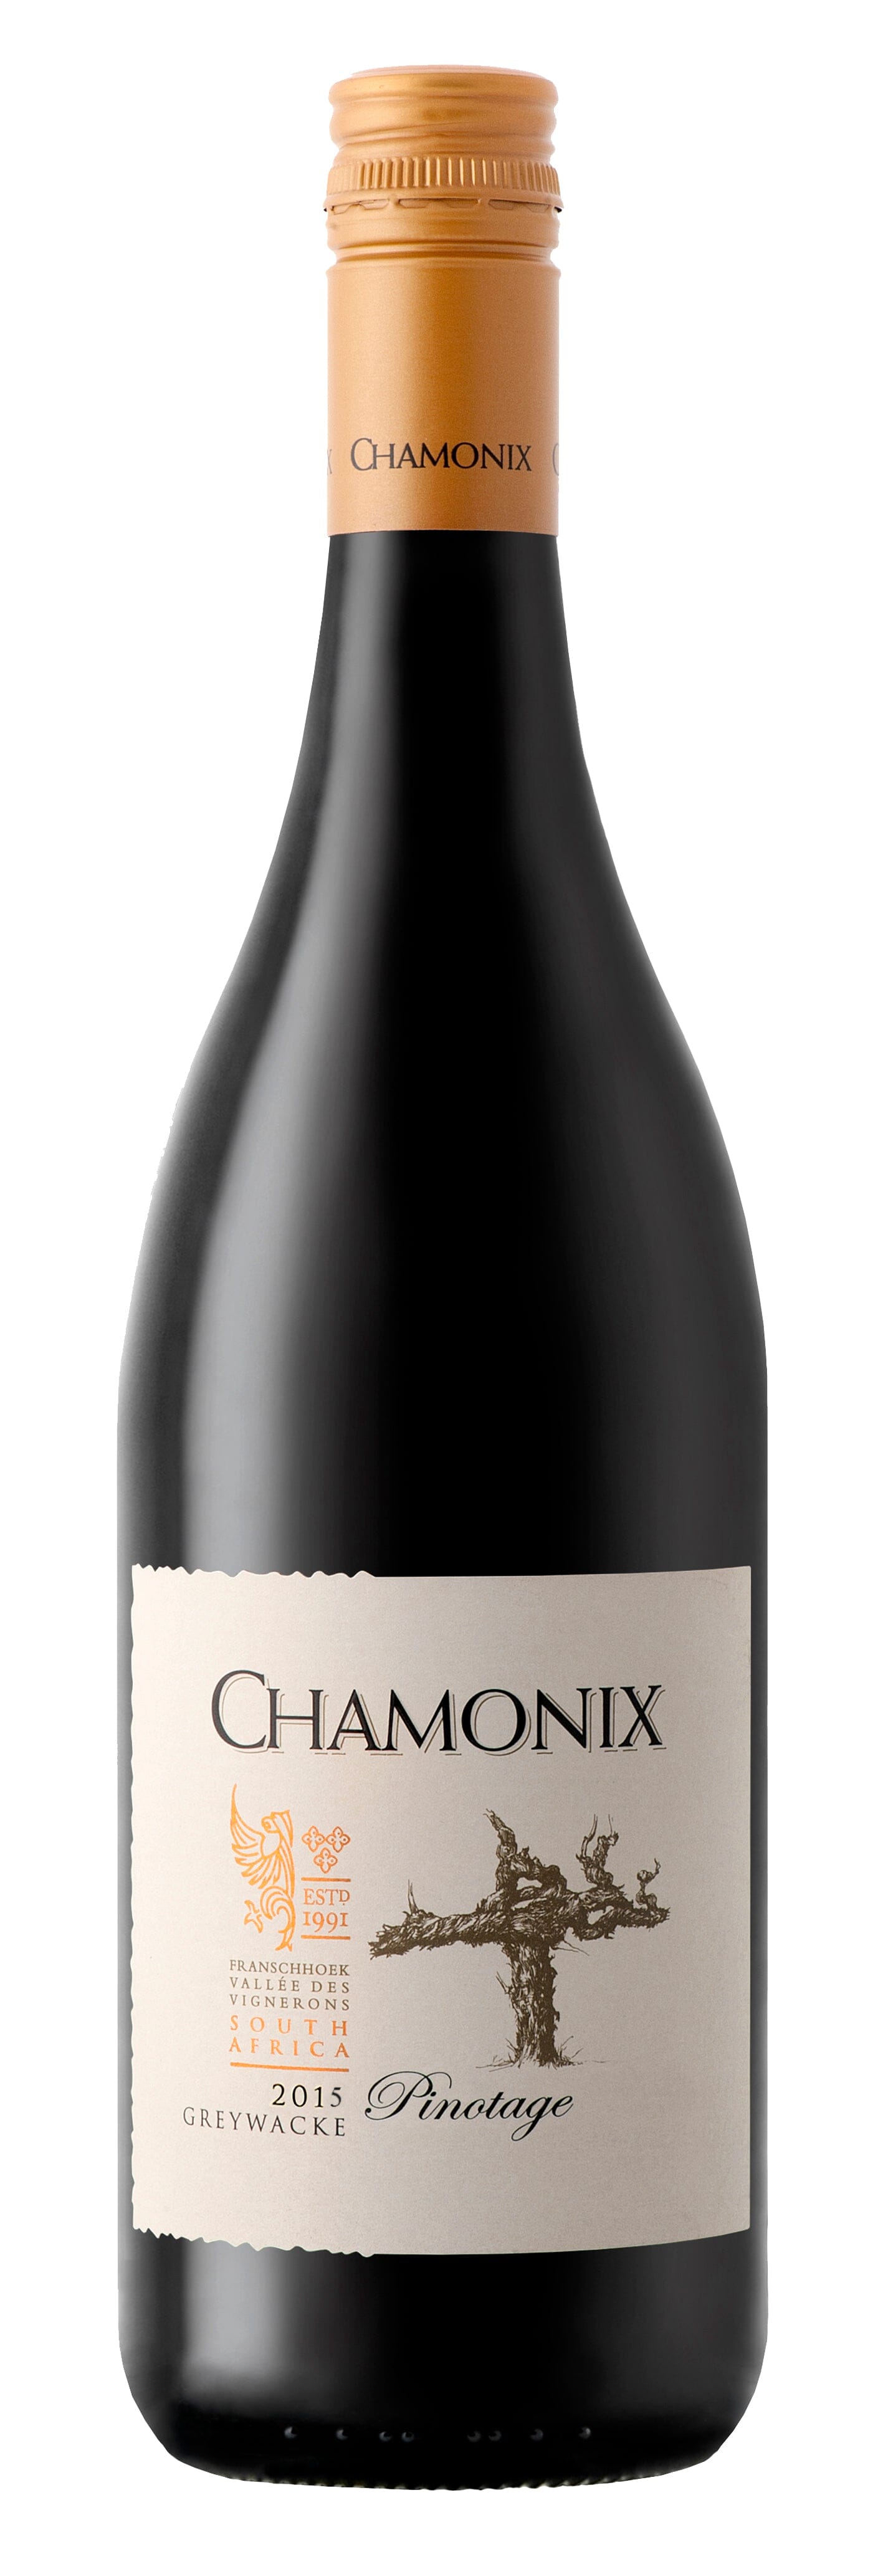 Chamonix Greywacke, Pinotage, Franschhoek, South Africa Wine Bottle ABS WInes 